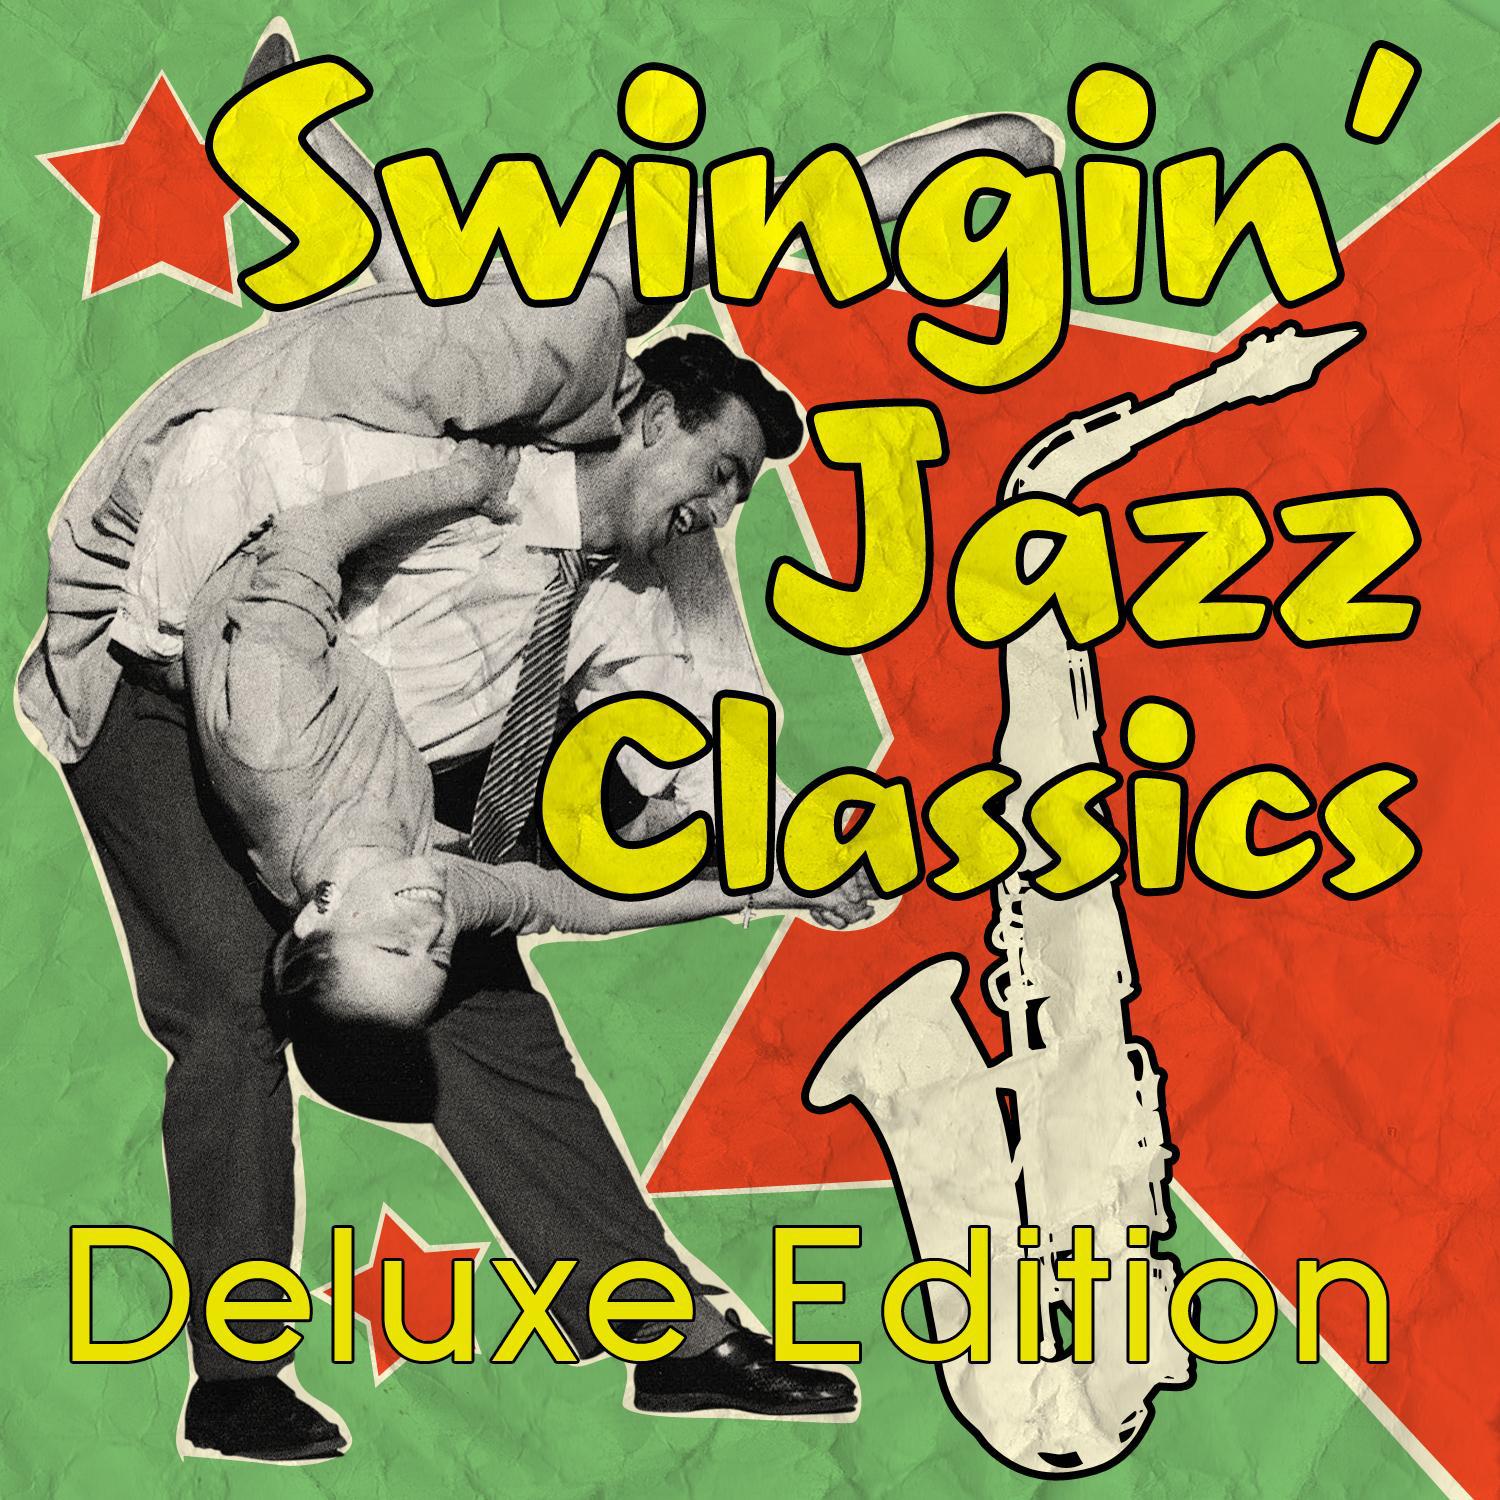 Swingin' Jazz Classics - Deluxe Edition